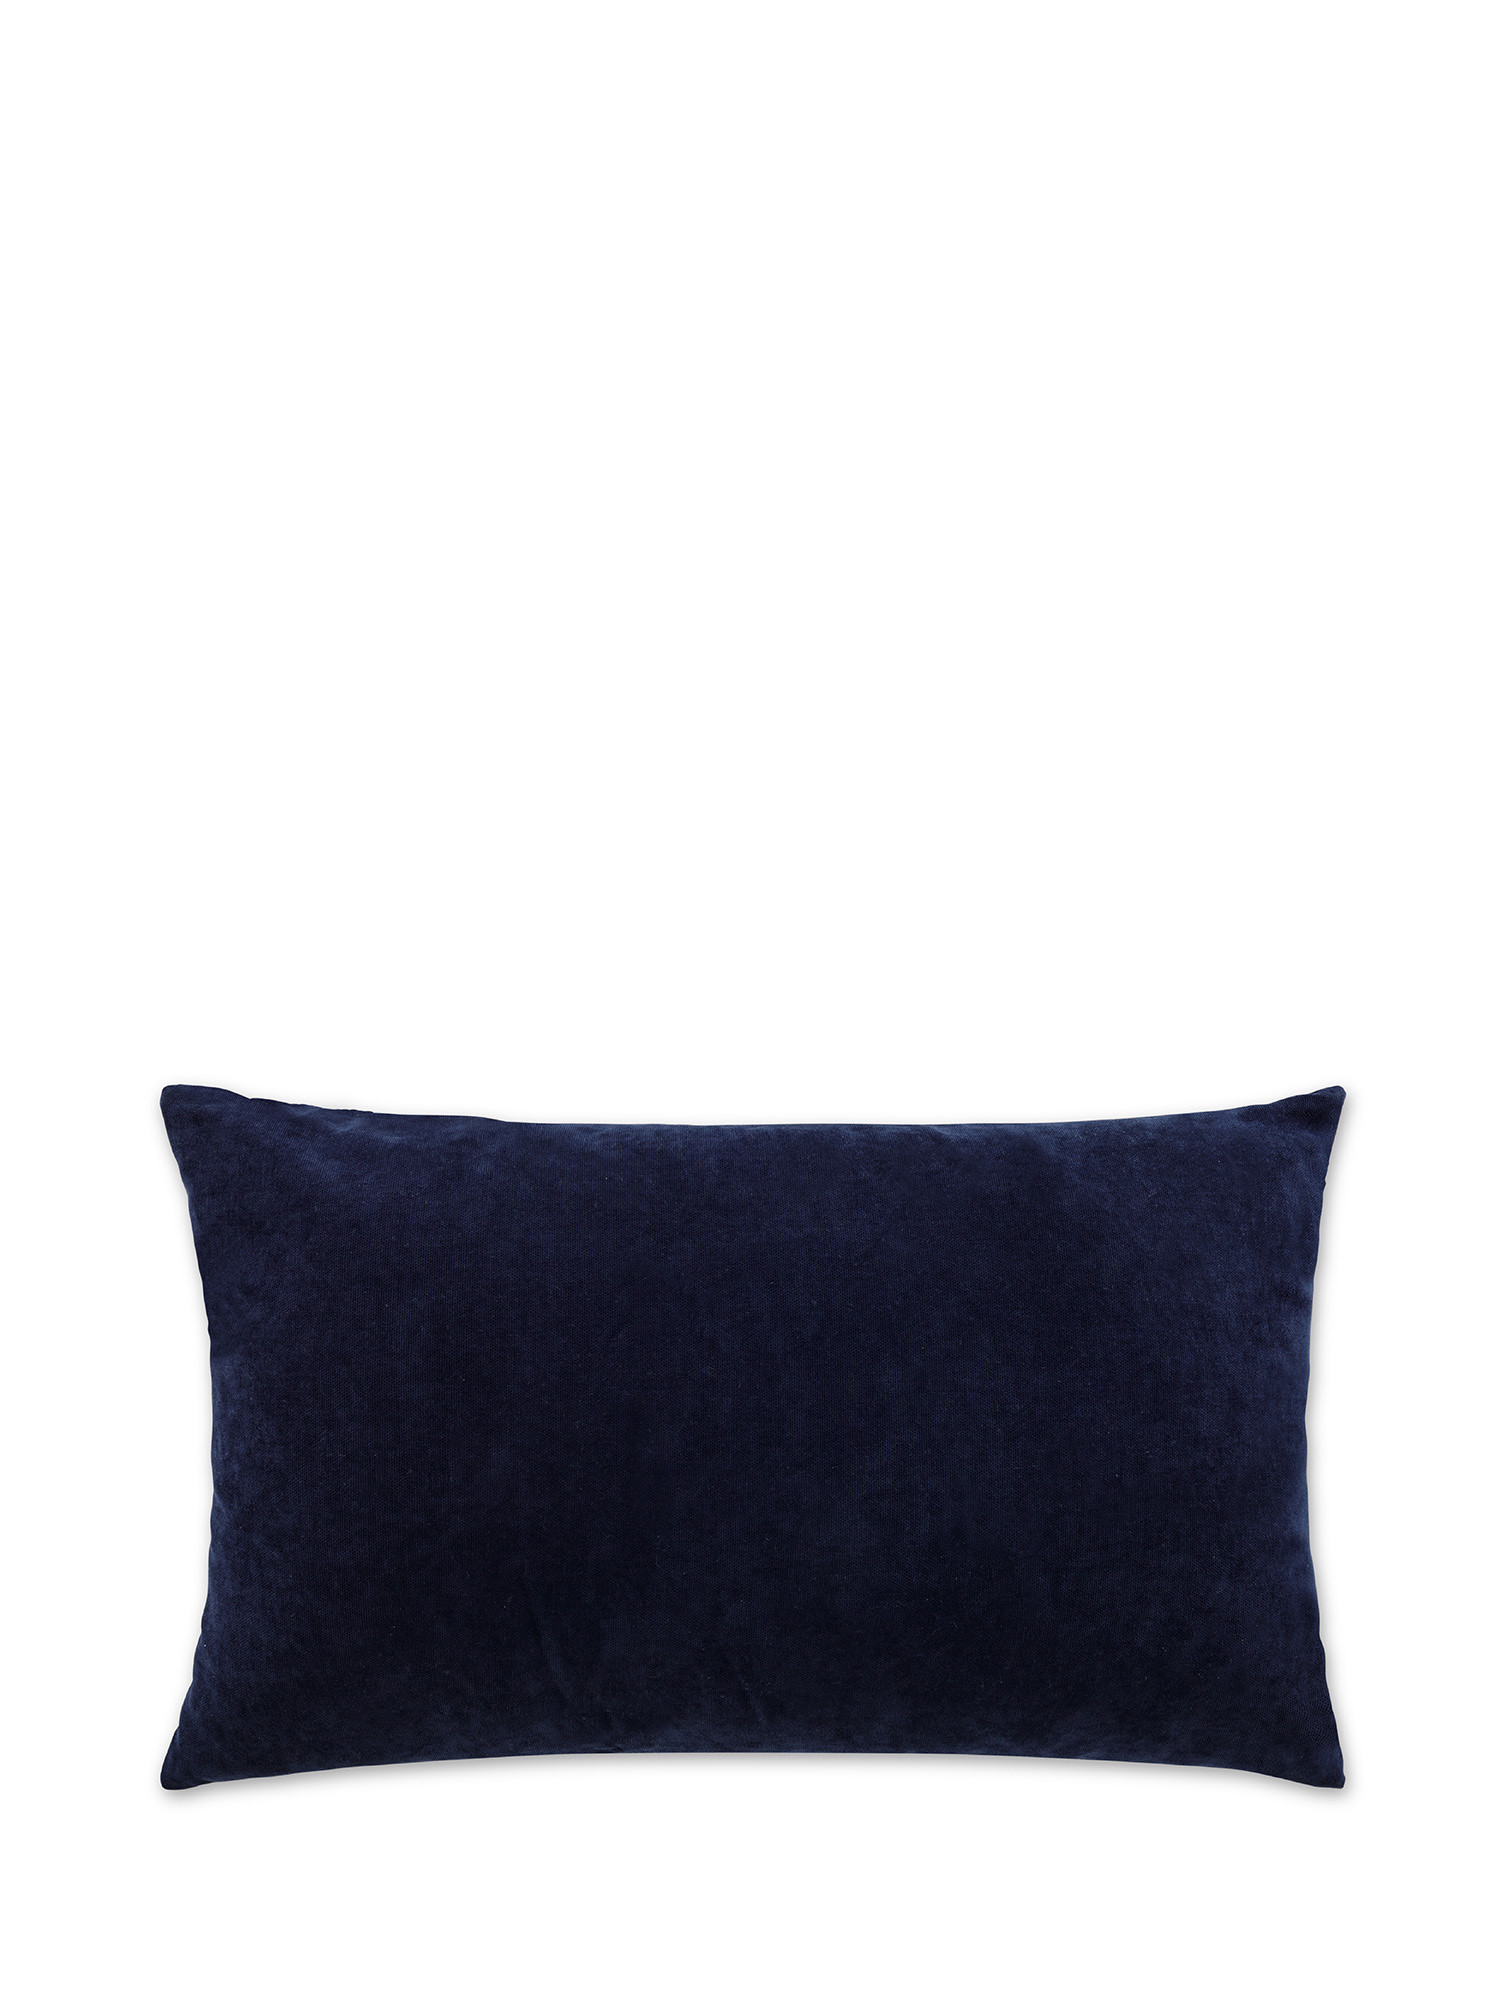 Jacquard cushion with rhombus motif 45x45cm, Blue, large image number 1